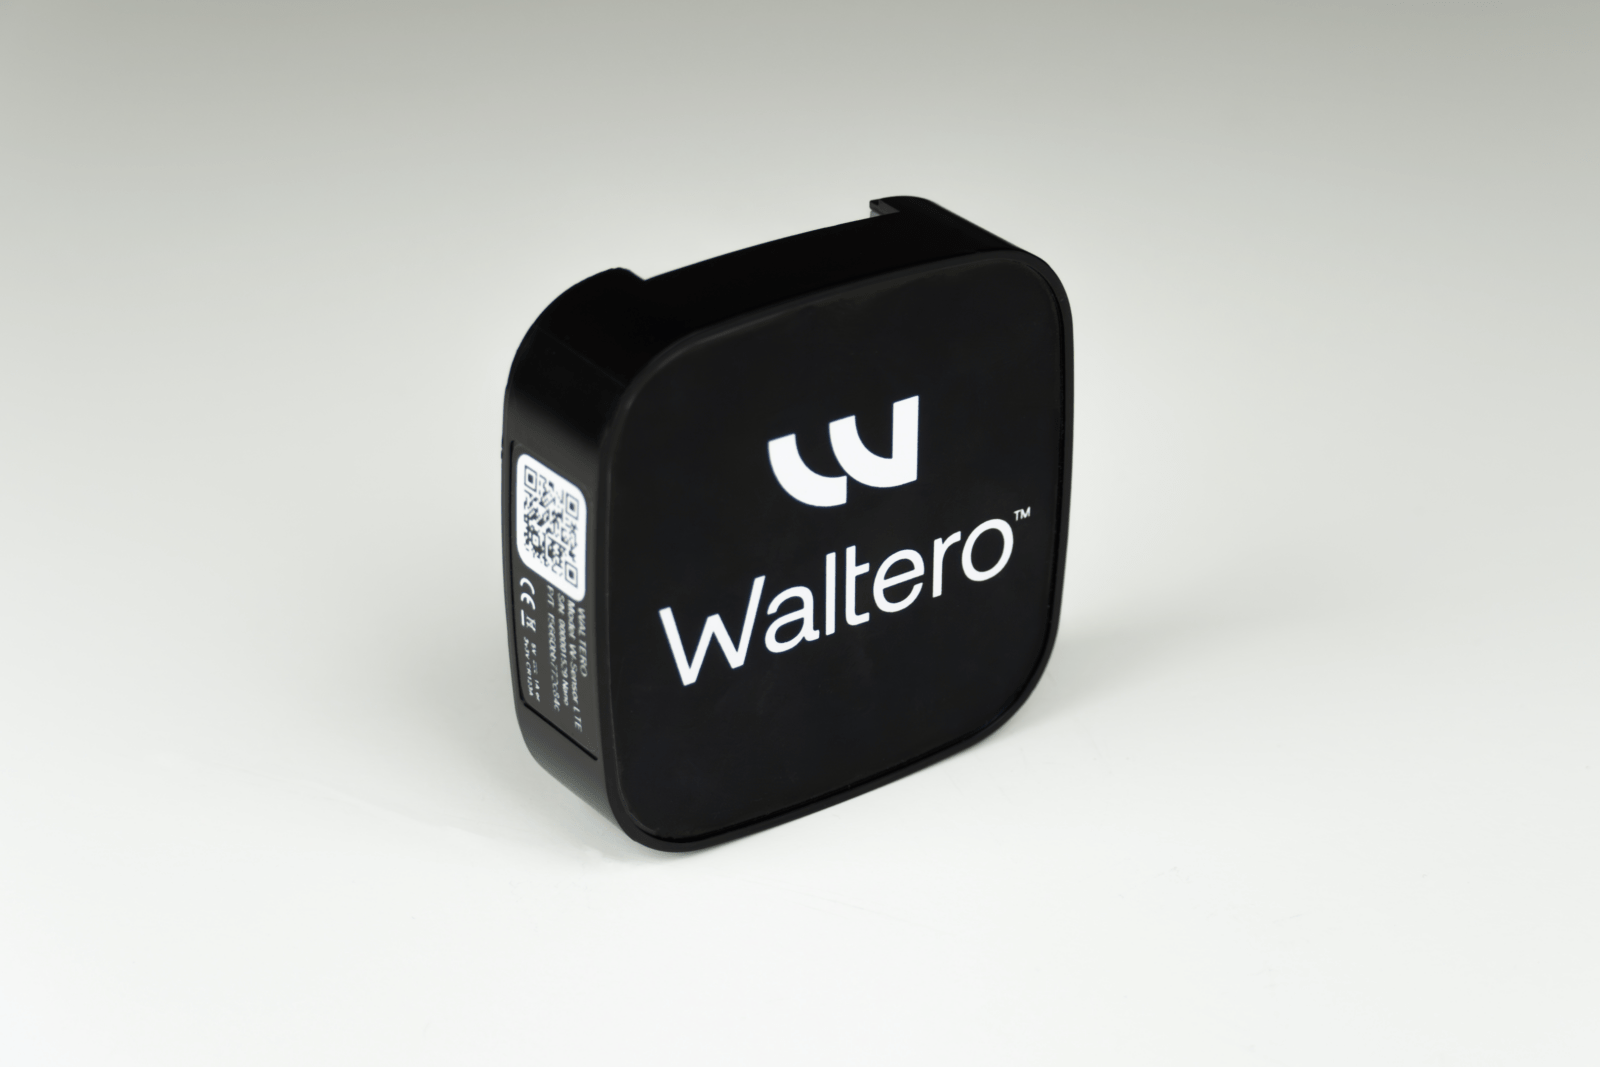 The Waltero W-sensor